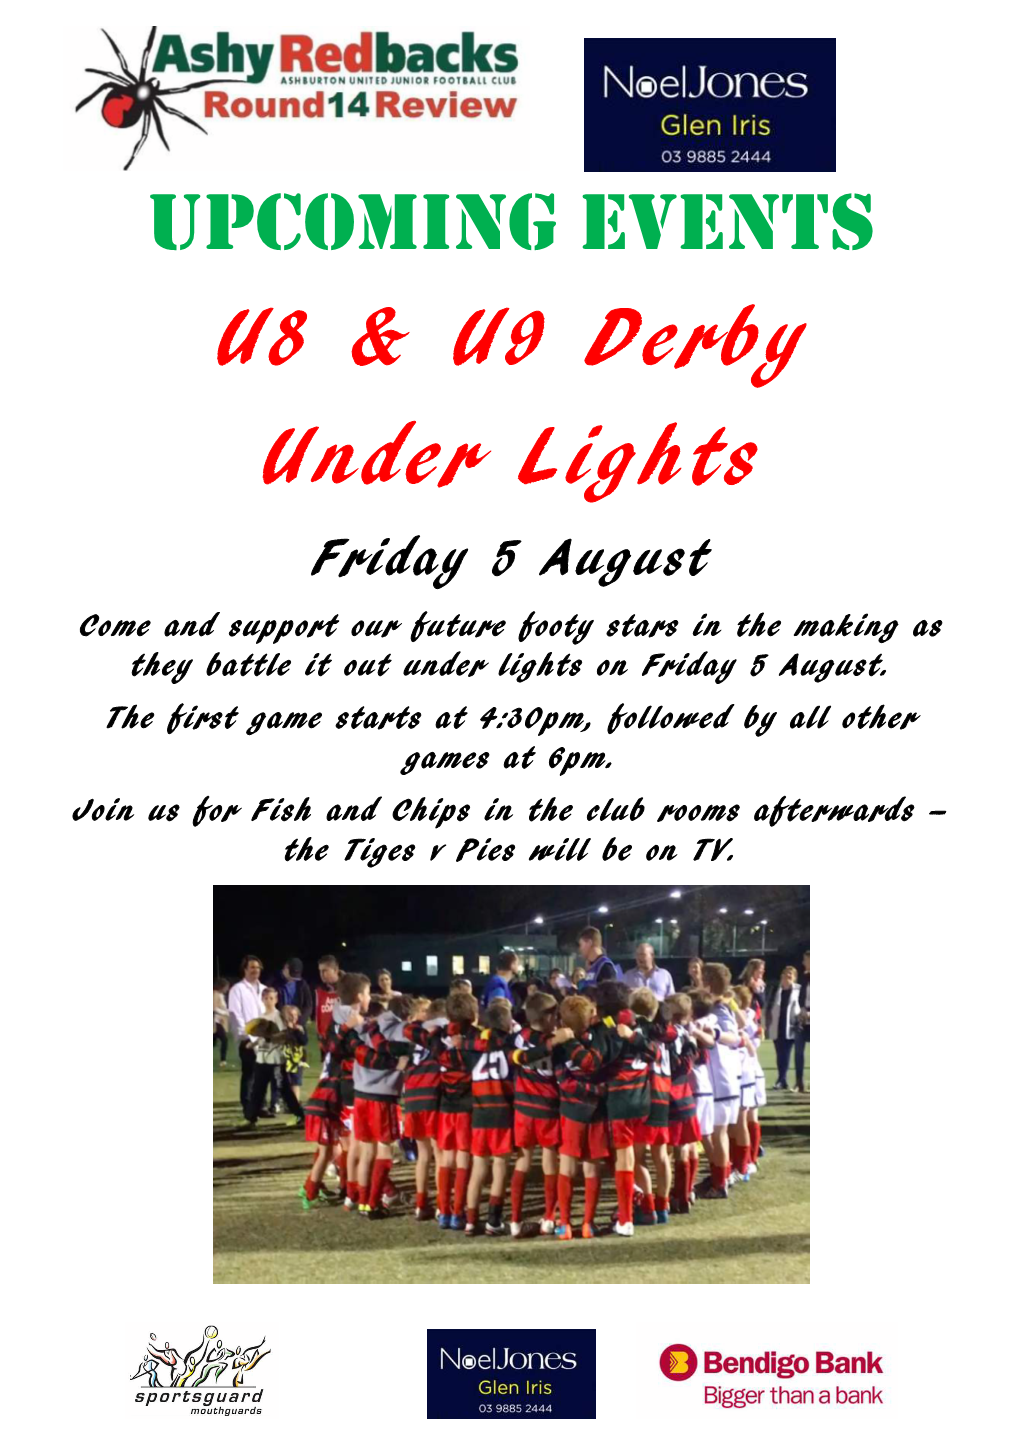 UPCOMING EVENTS U8 & U9 Derby Under Lights